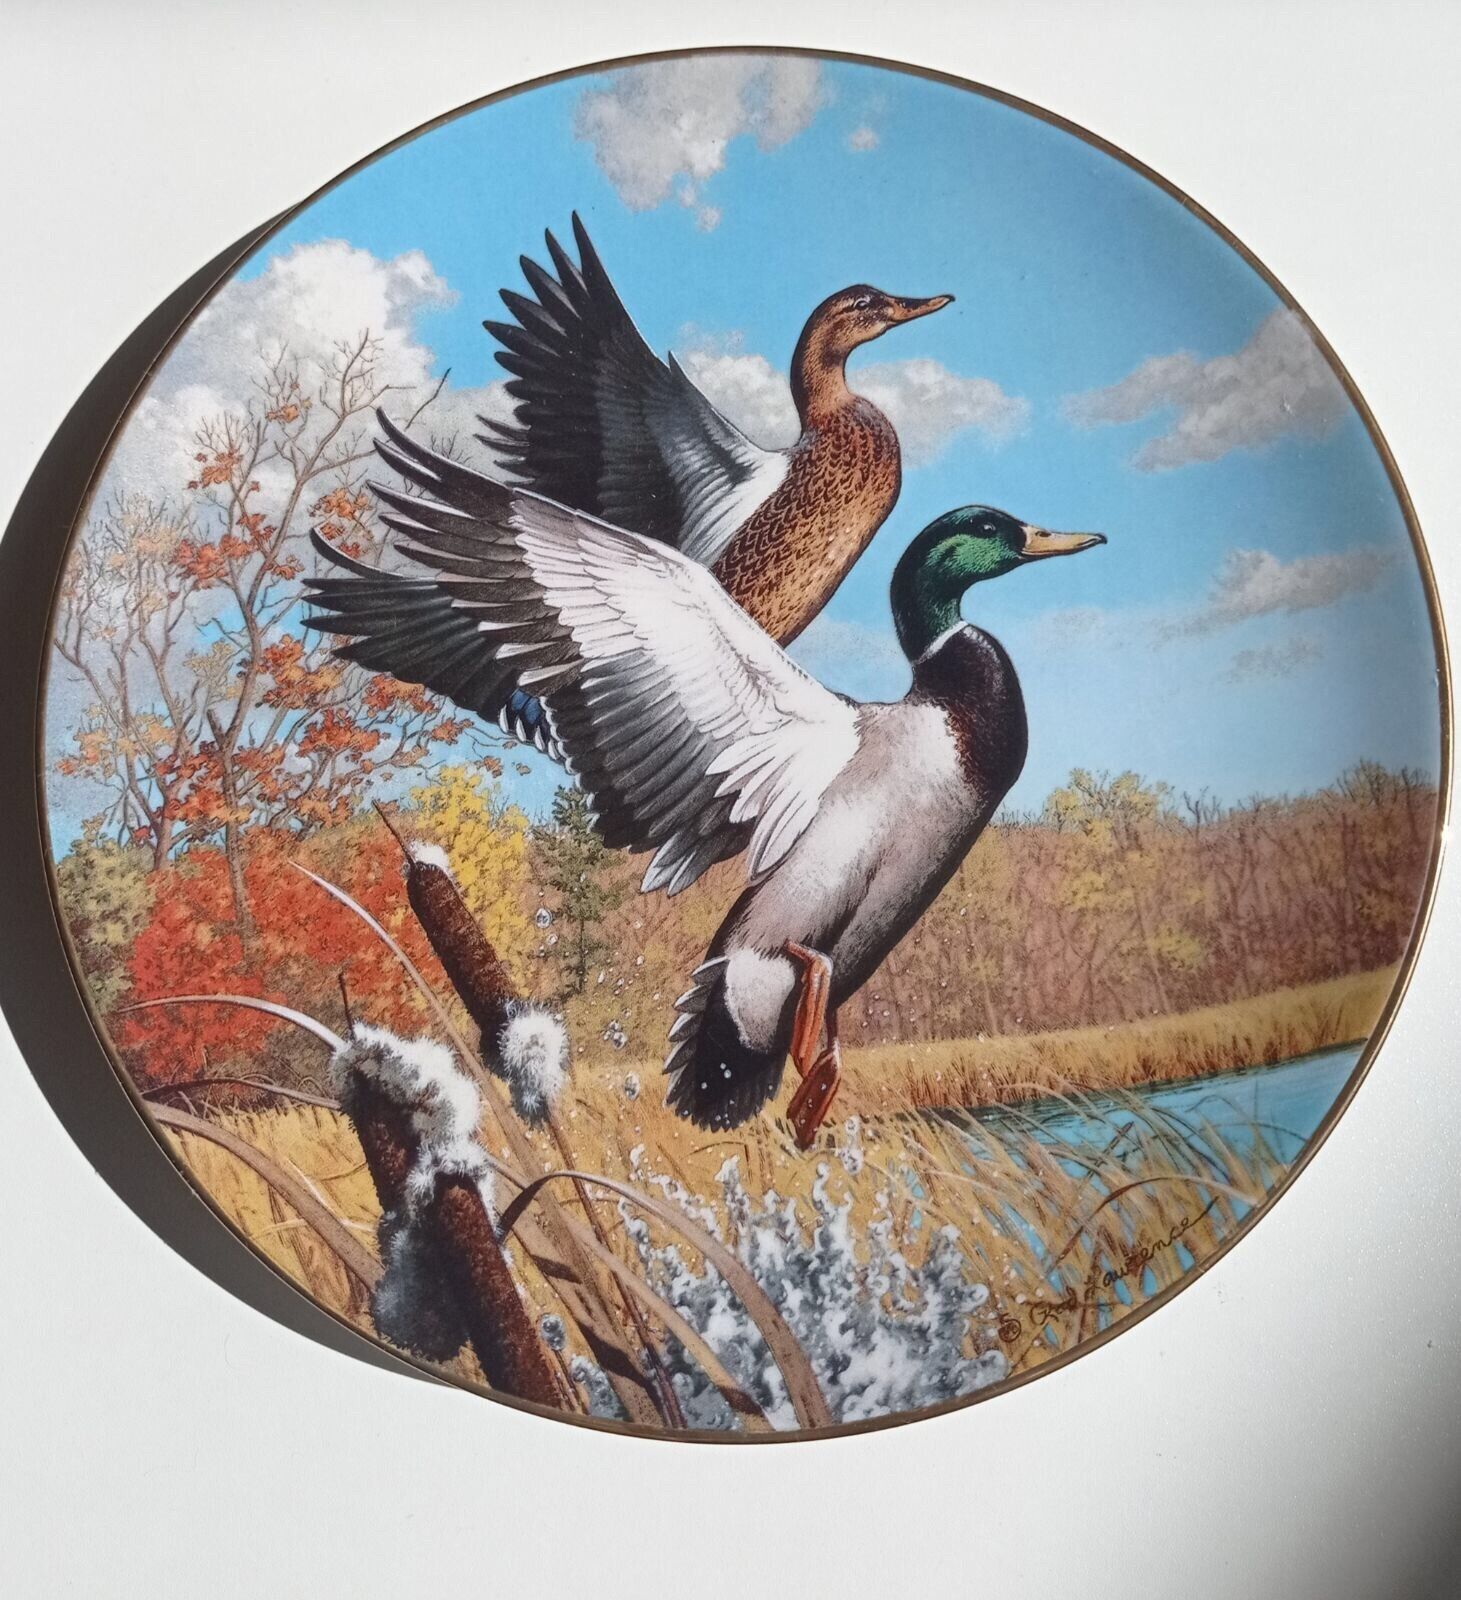 North American Ducks Plate Collection “AUTUMN FLIGHT\